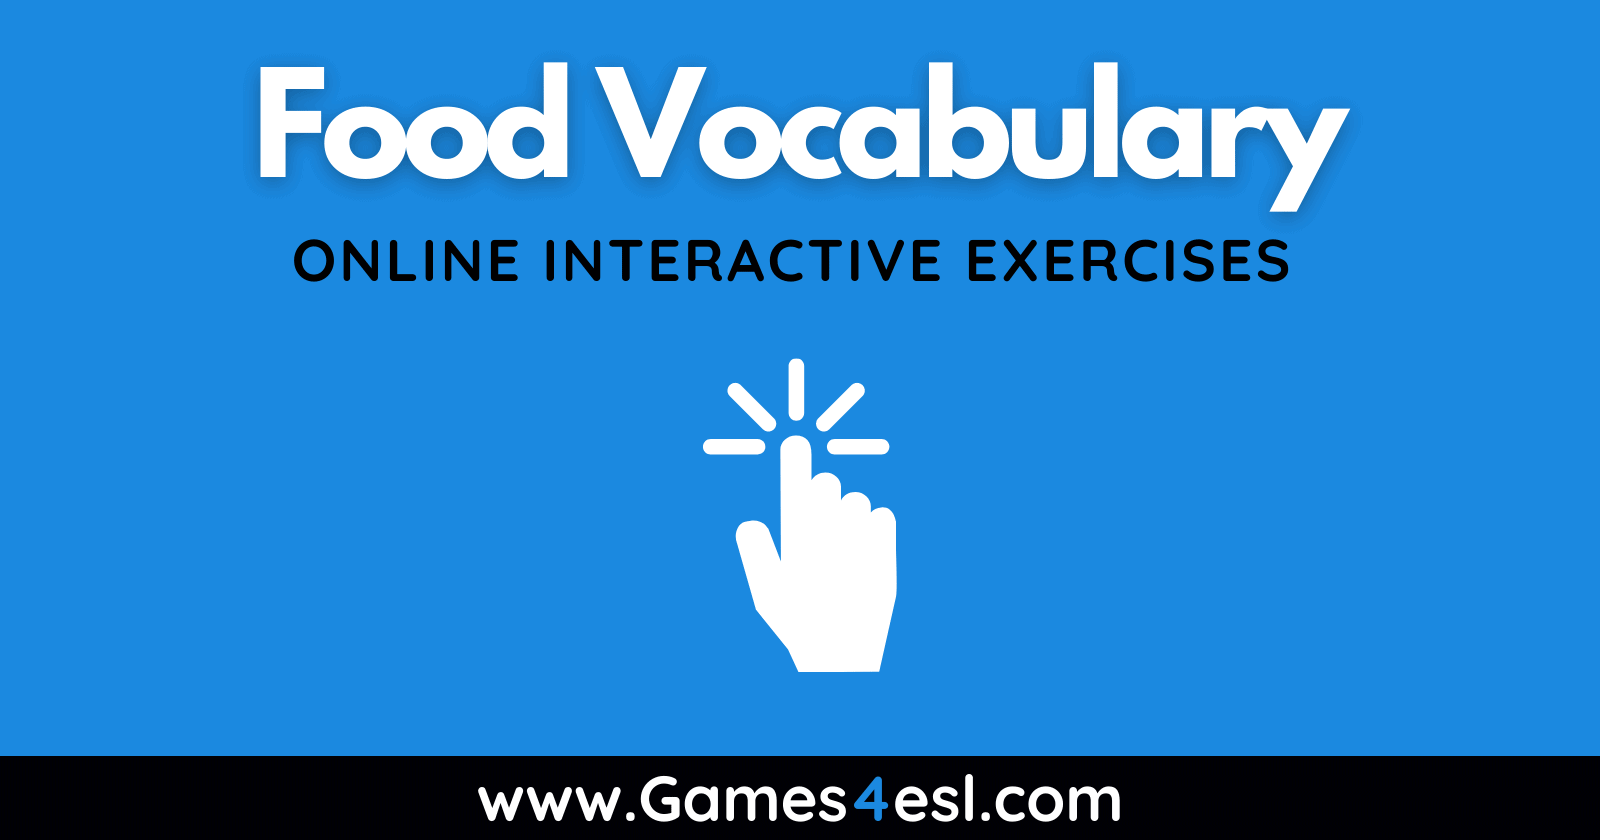 Food Vocabulary Exercises